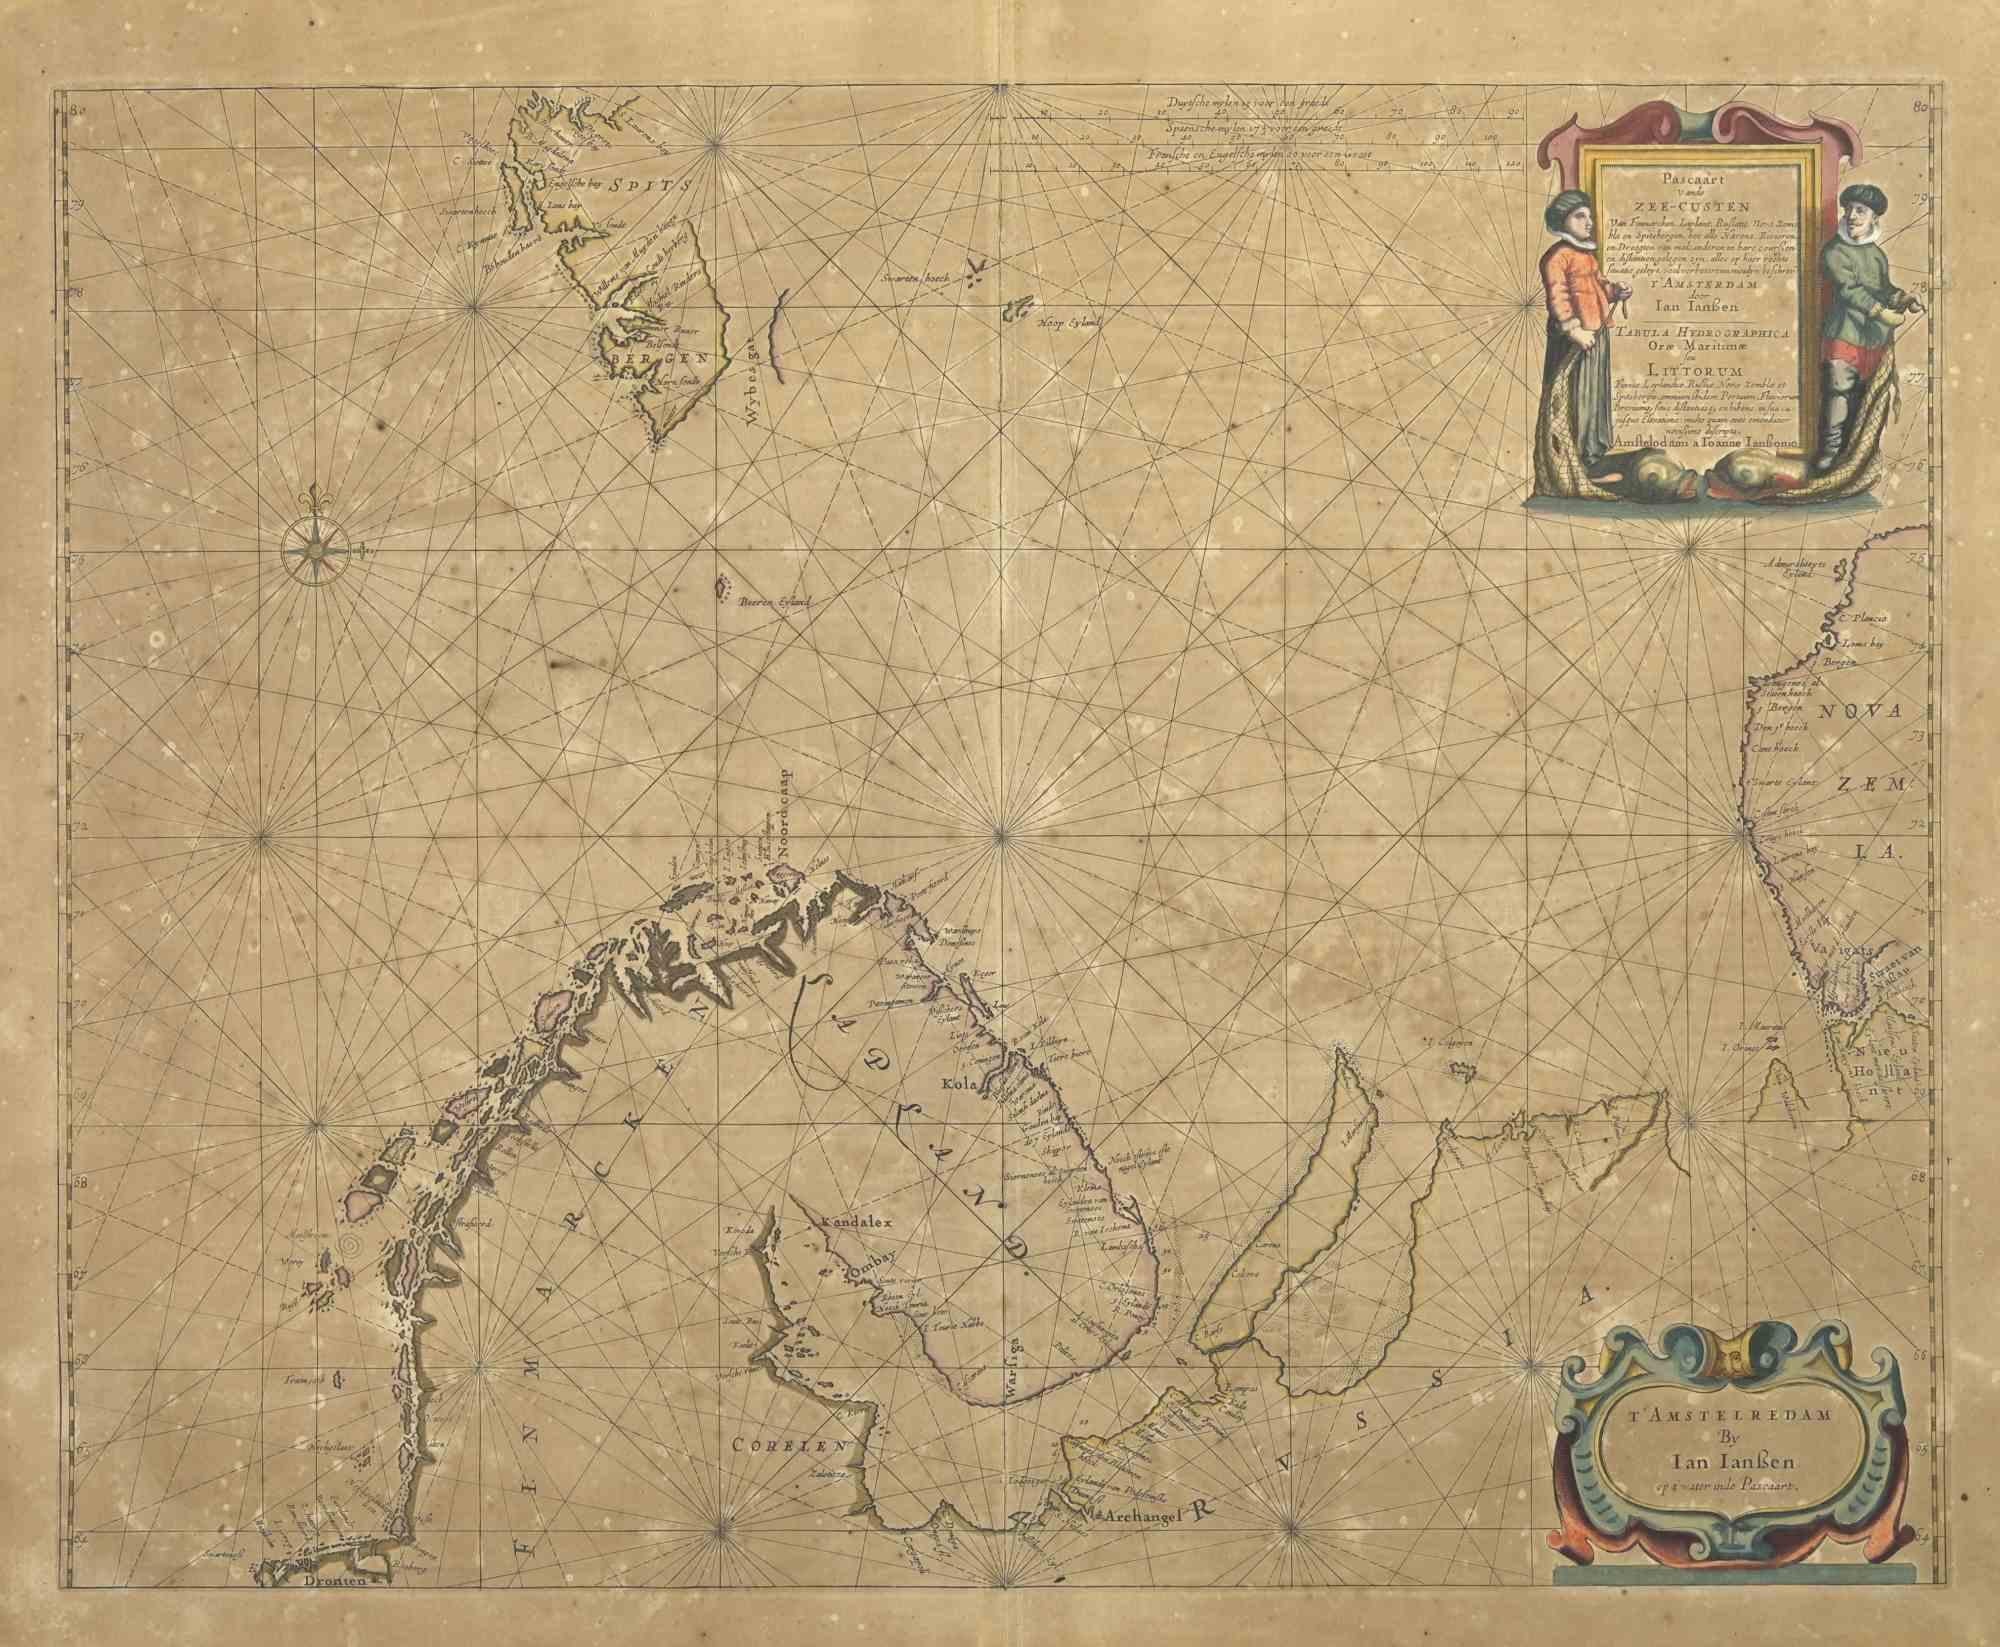 Amstelredam is an ancient map realized in 1650 by Johannes Janssonius (1588-1664).

Good conditions.

from Atlantis majoris quinta pars, Orbem maritimum [Novus Atlas, volume V: carte marittime]. Amsterdam: Janssonius, 1650. Technique is etching and